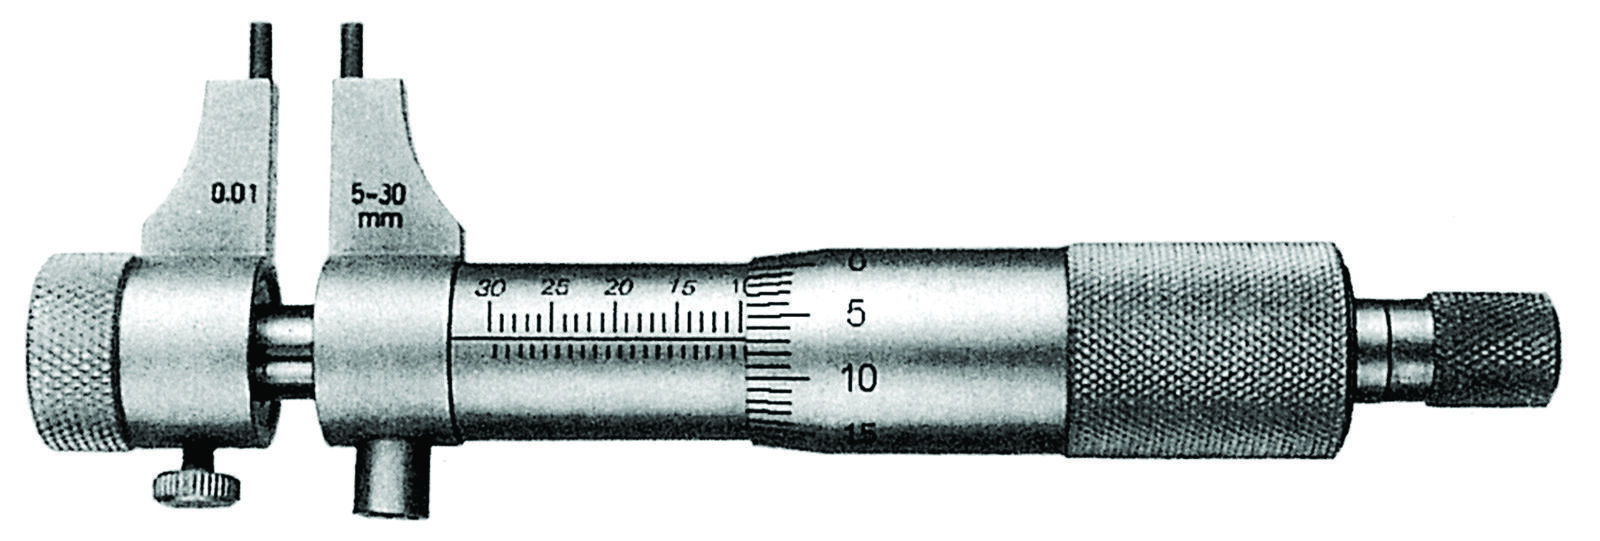 25 - 50mm Inside Micrometer